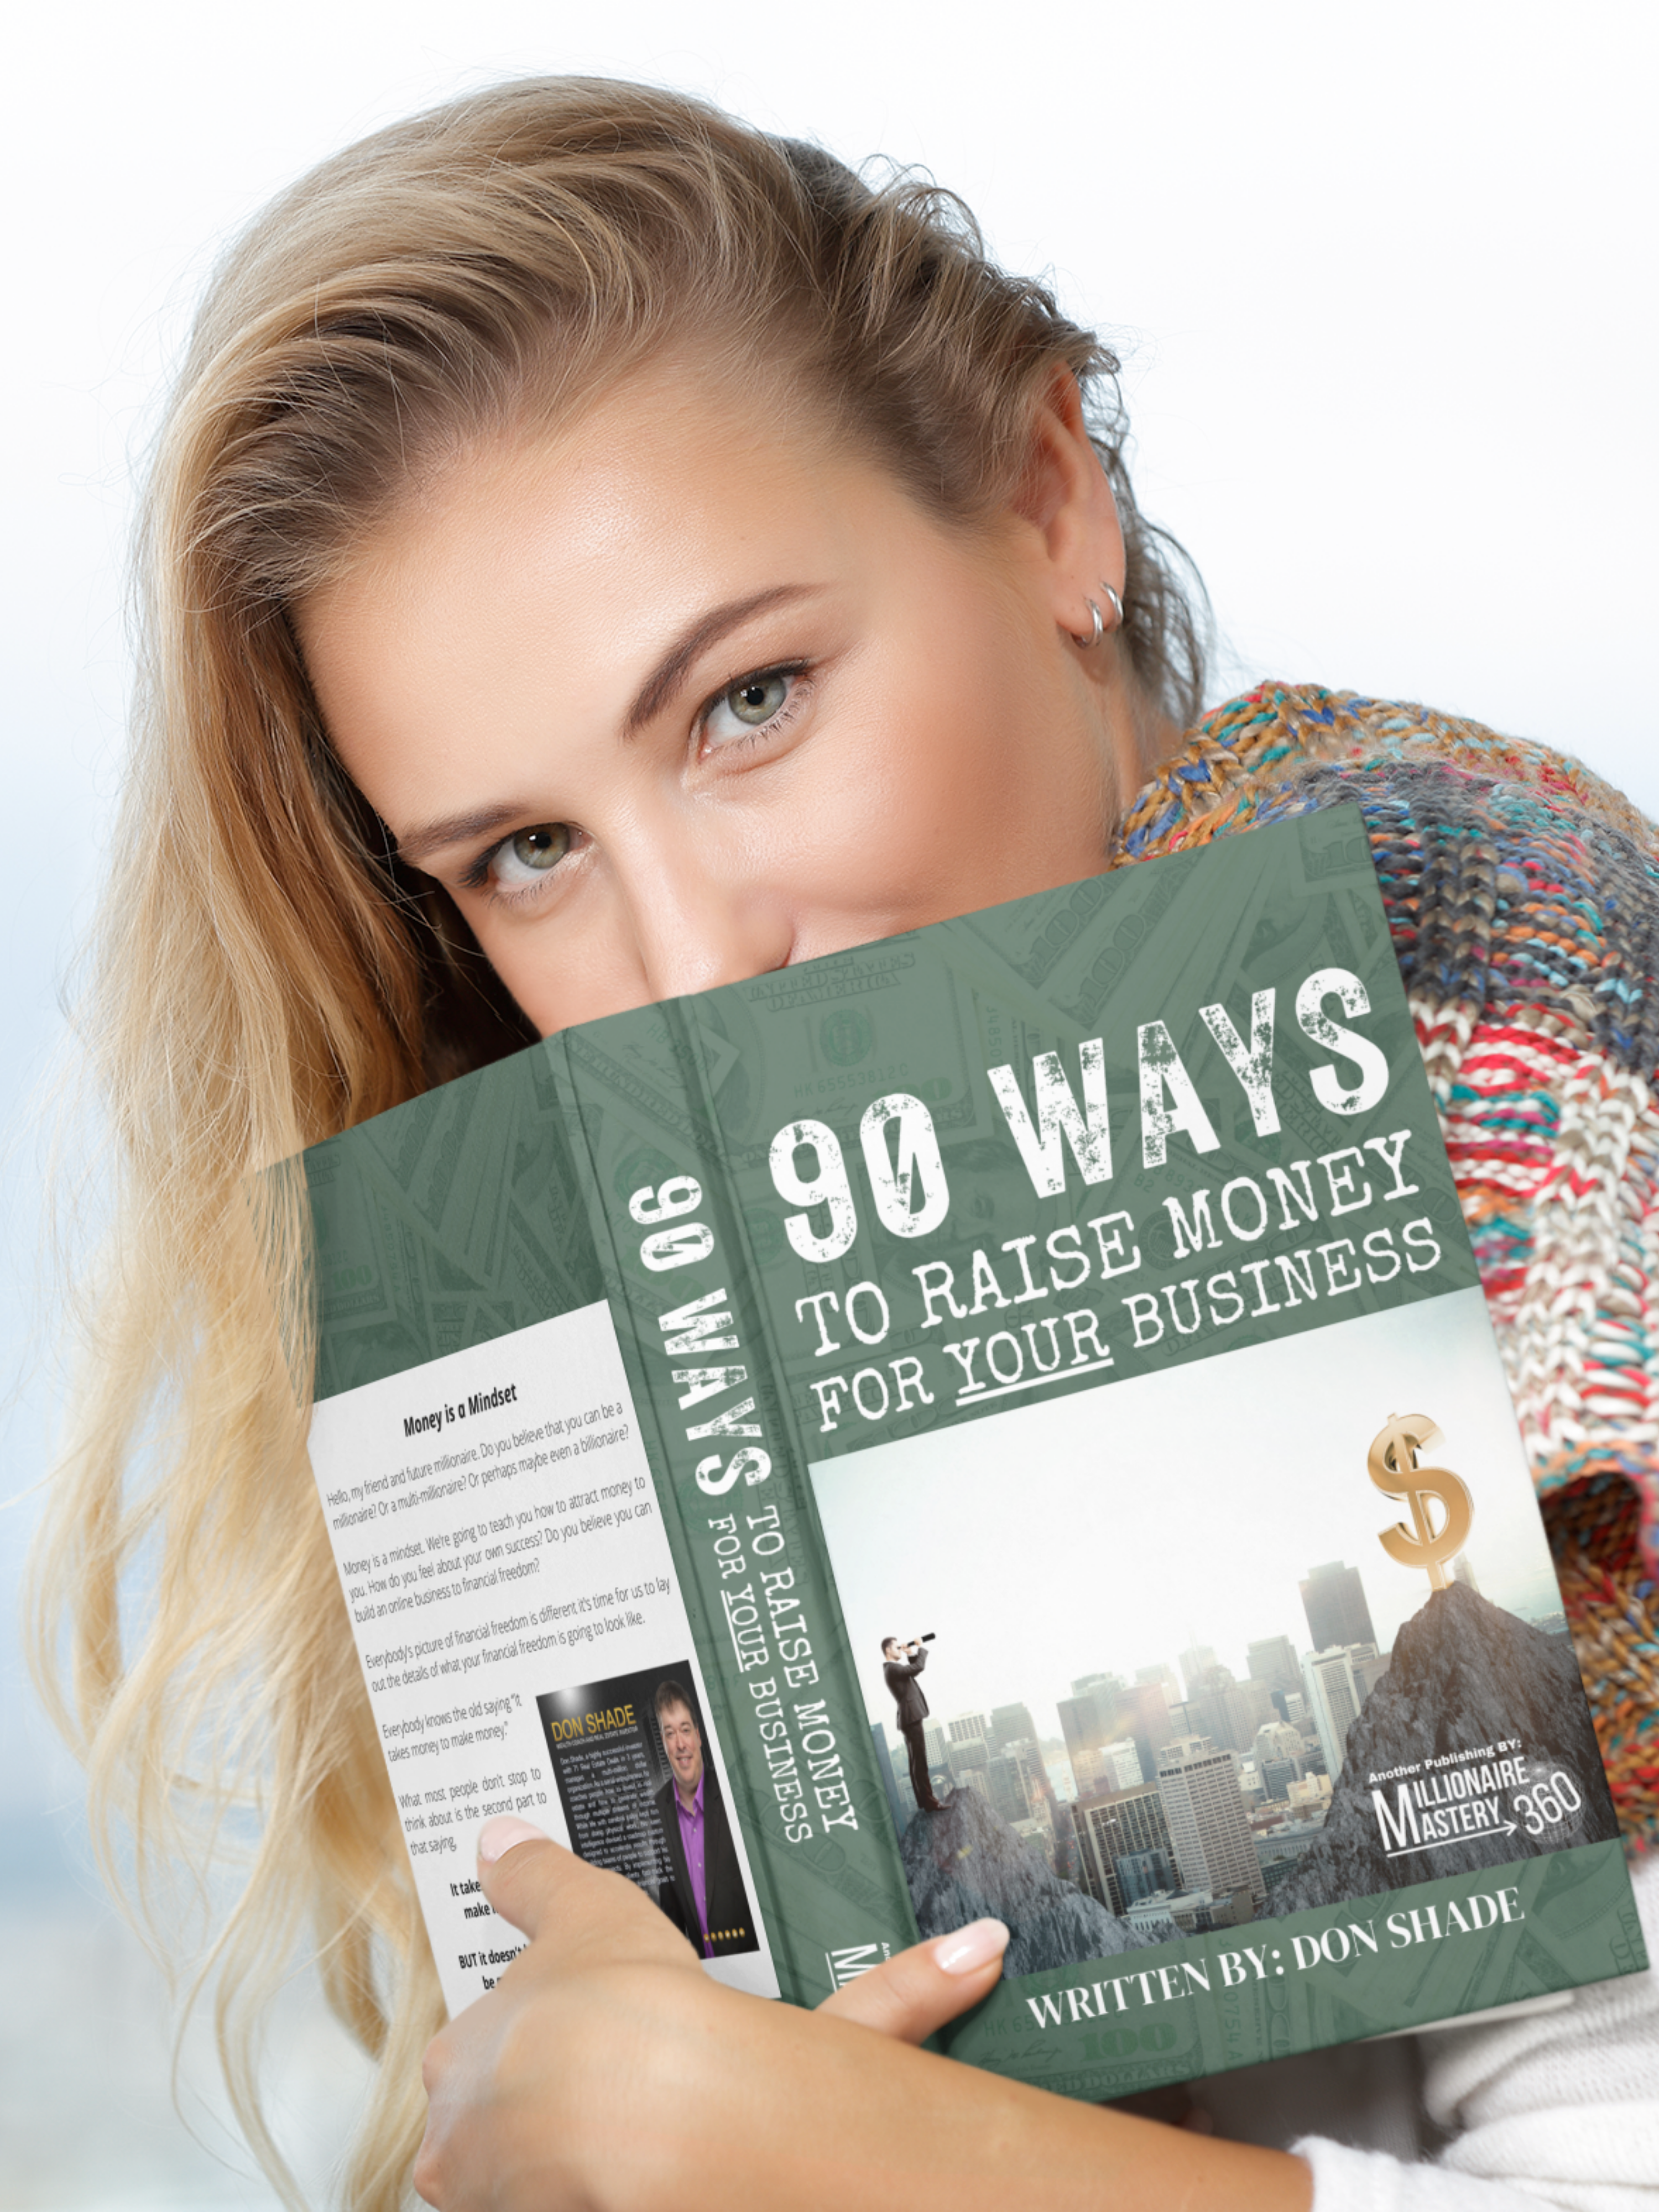 90 ways to raise money